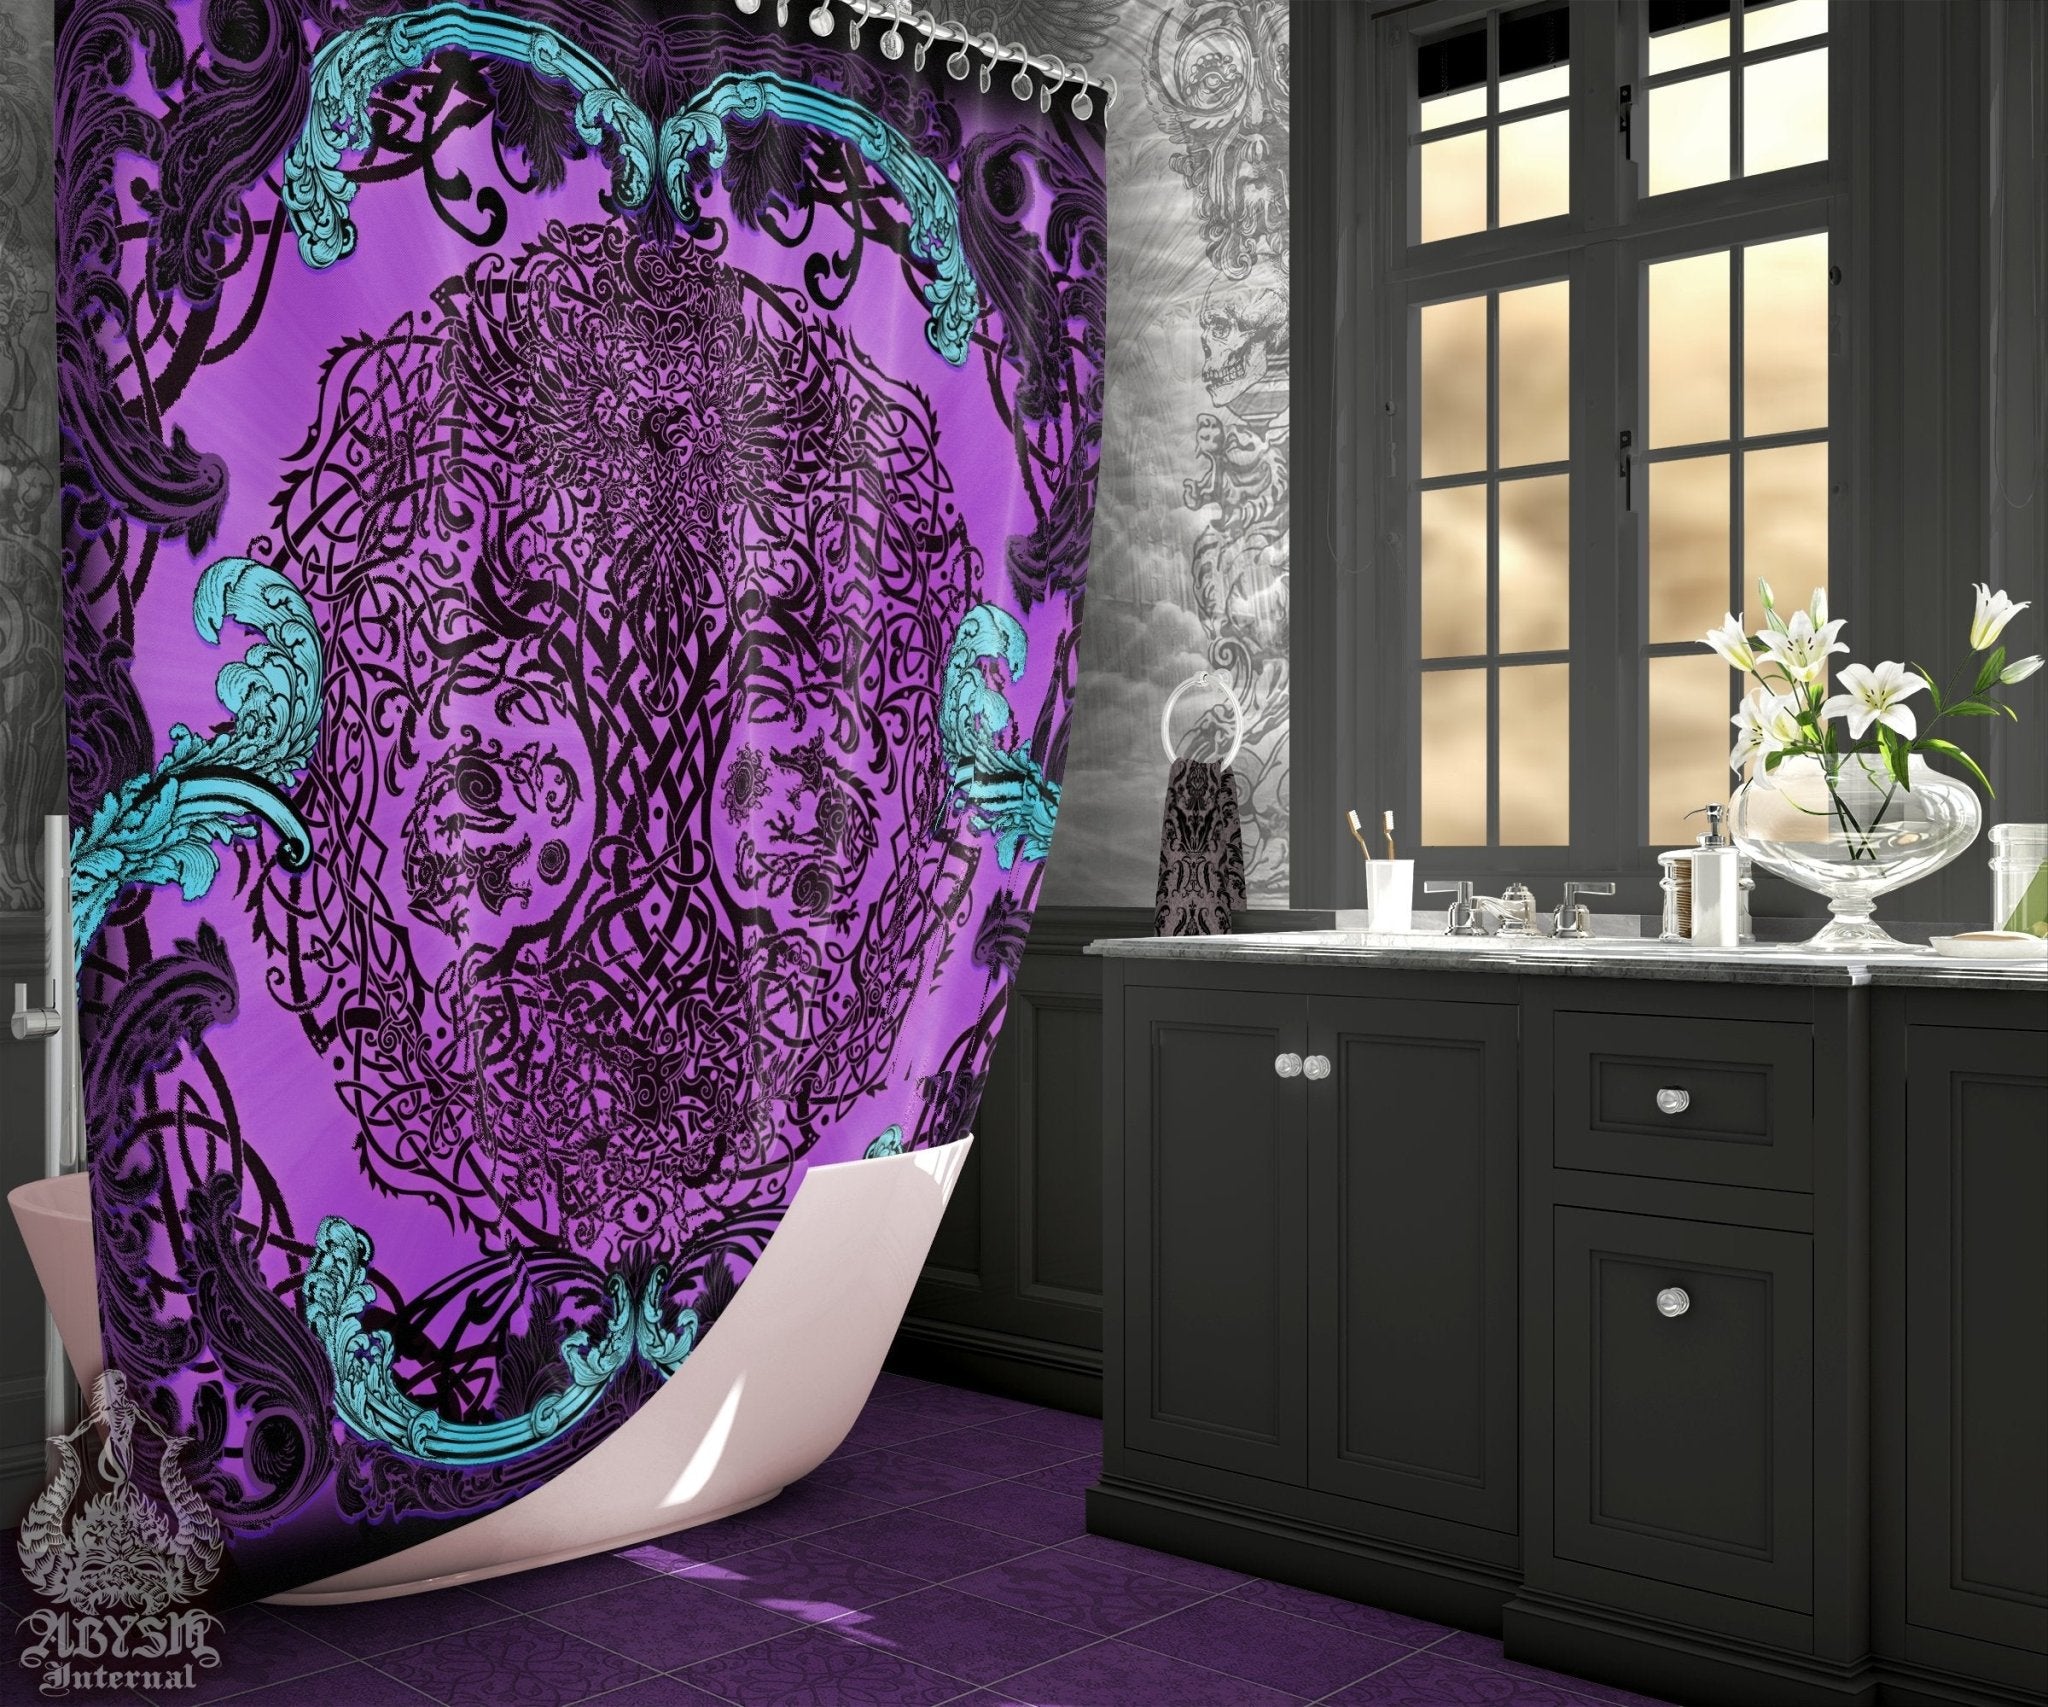 Viking Shower Curtain, Yggdrasil, Norse, Gothic Bathroom Decor, Pagan, Tree of Life - Pastel Goth, Purple - Abysm Internal